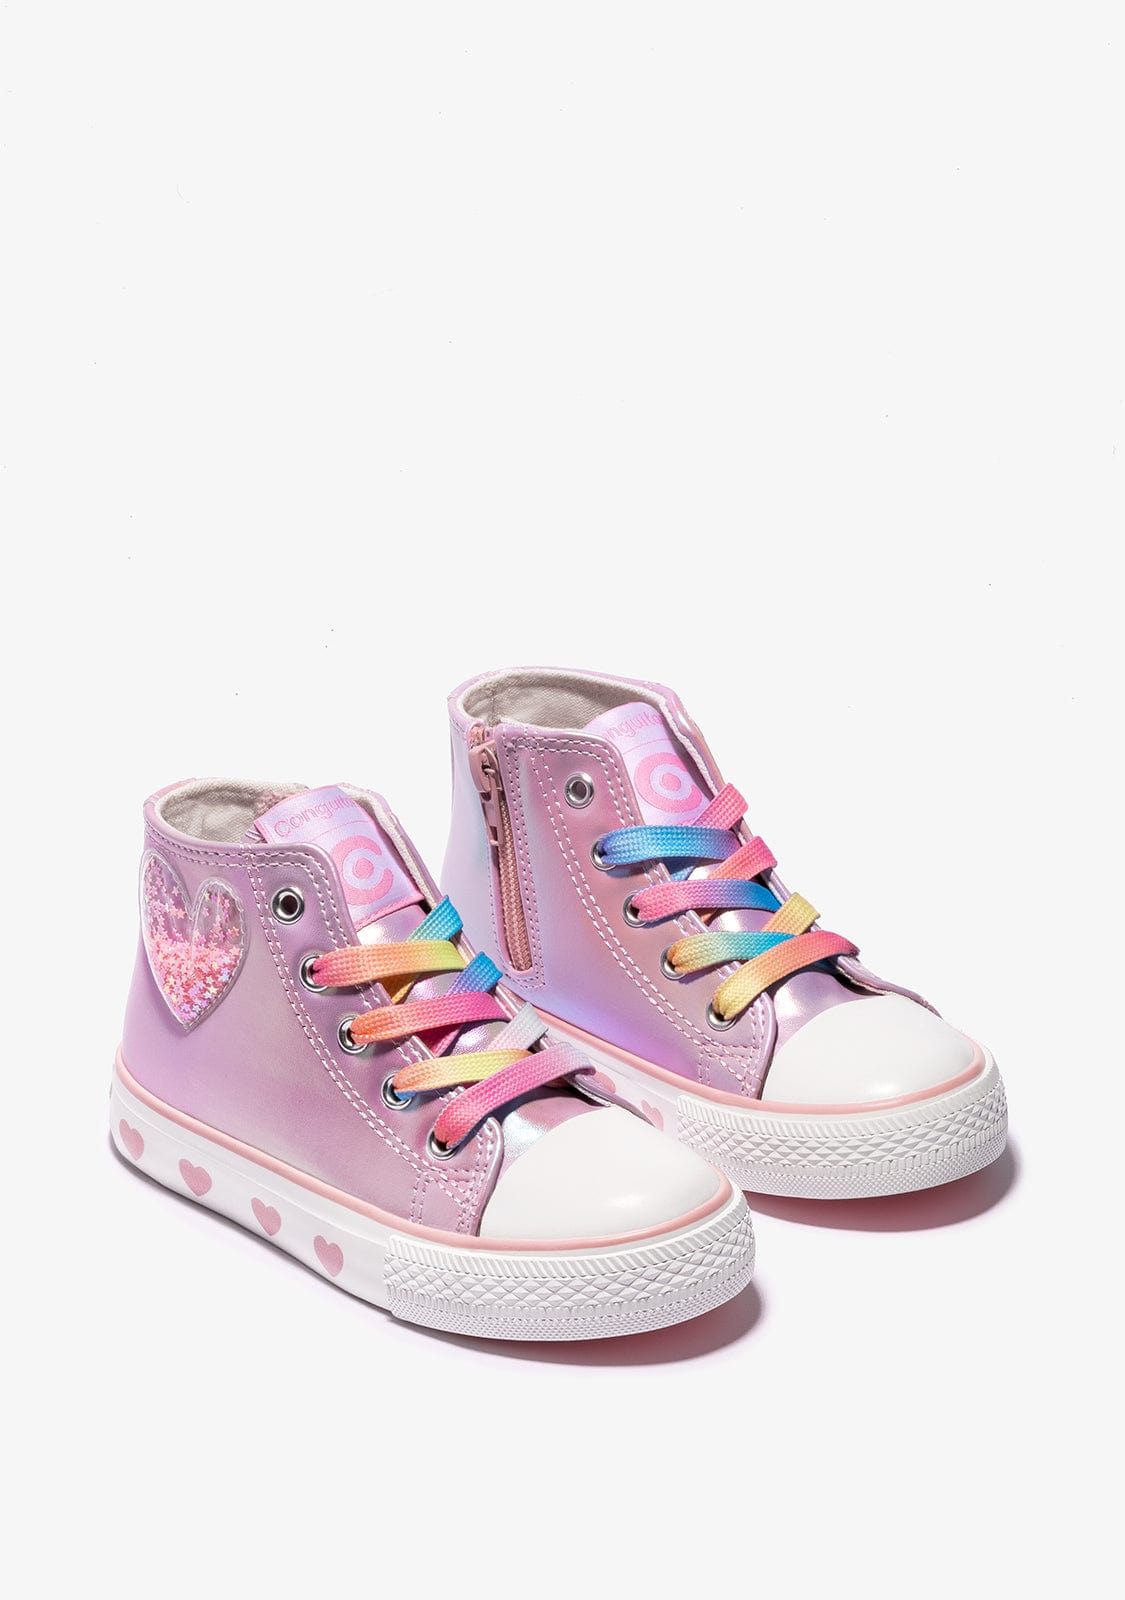 CONGUITOS Shoes Iridescent Pink Heart Hi-Top Sneakers